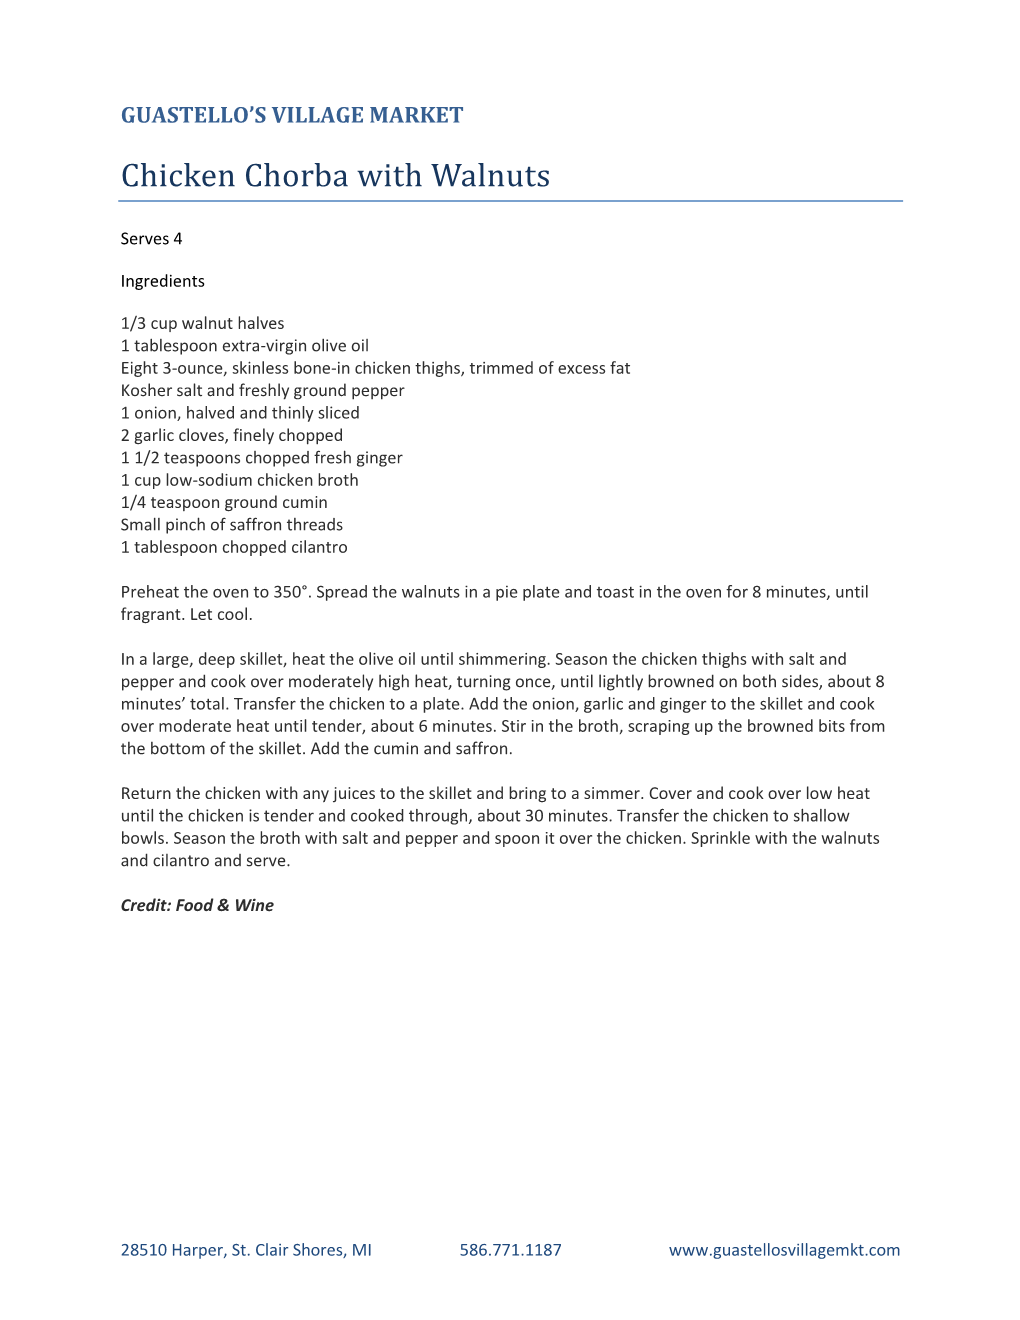 Chicken Chorba with Walnuts